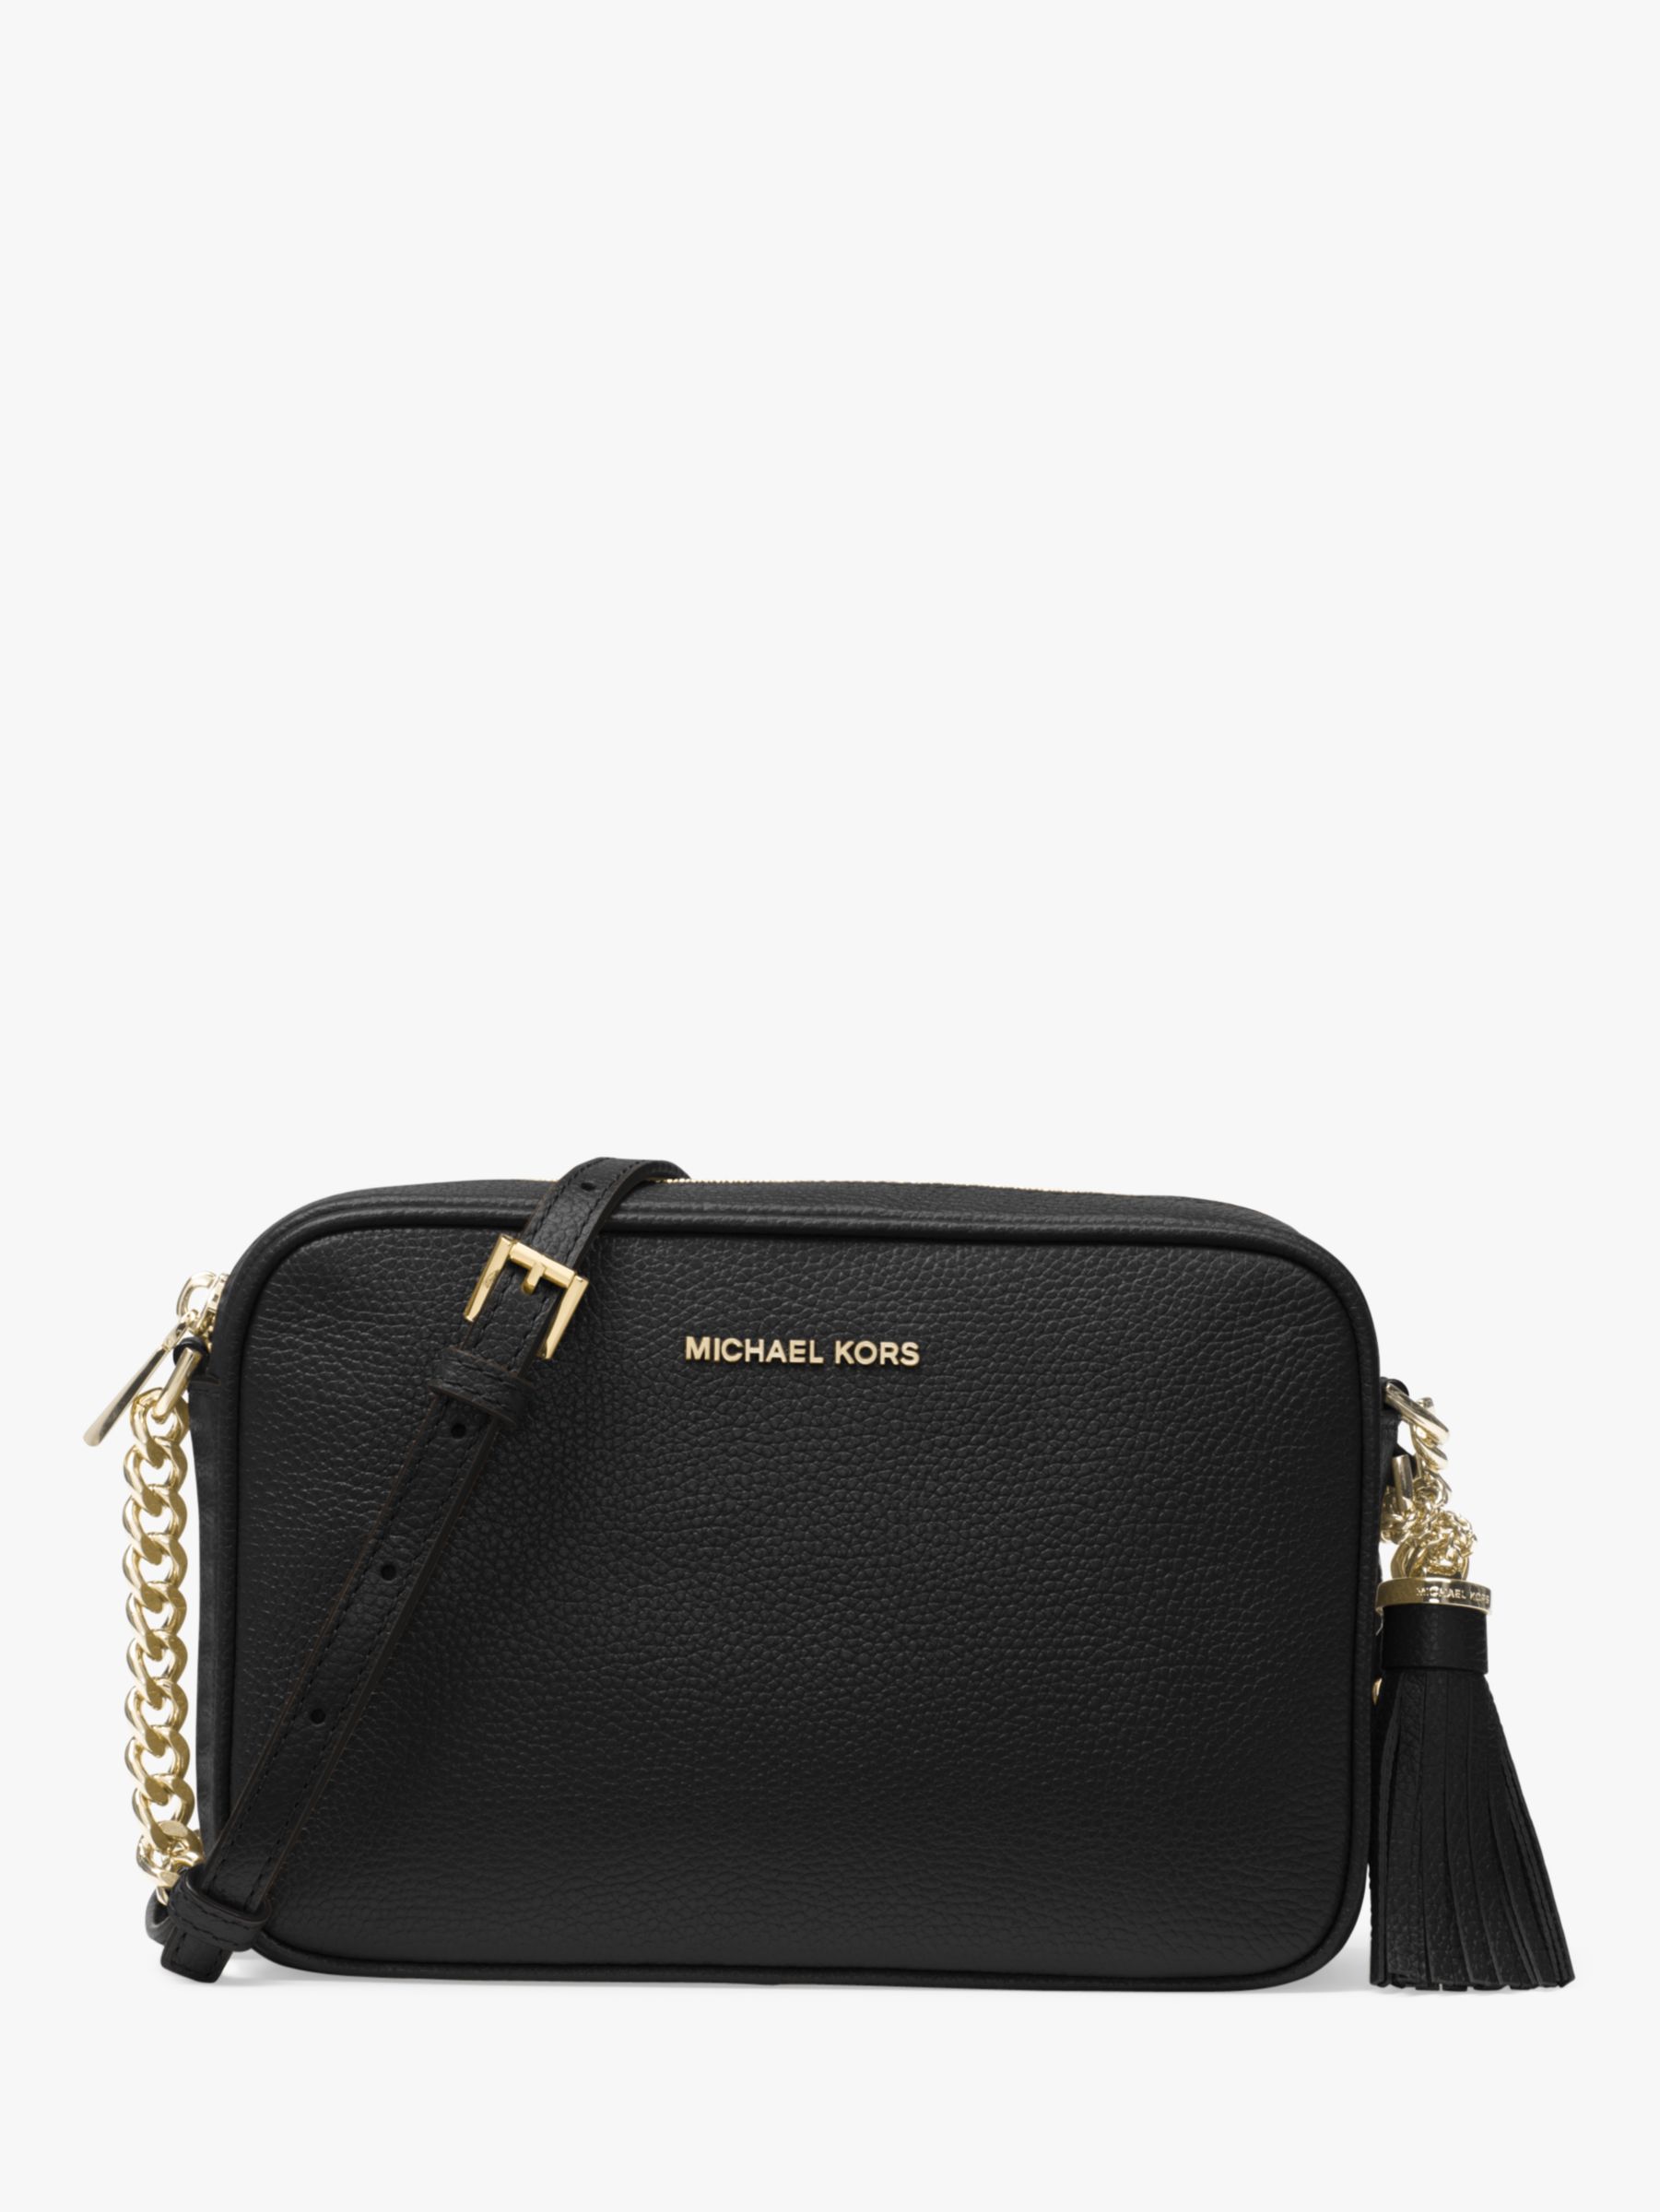 Women's Michael Kors Handbags, Bags 